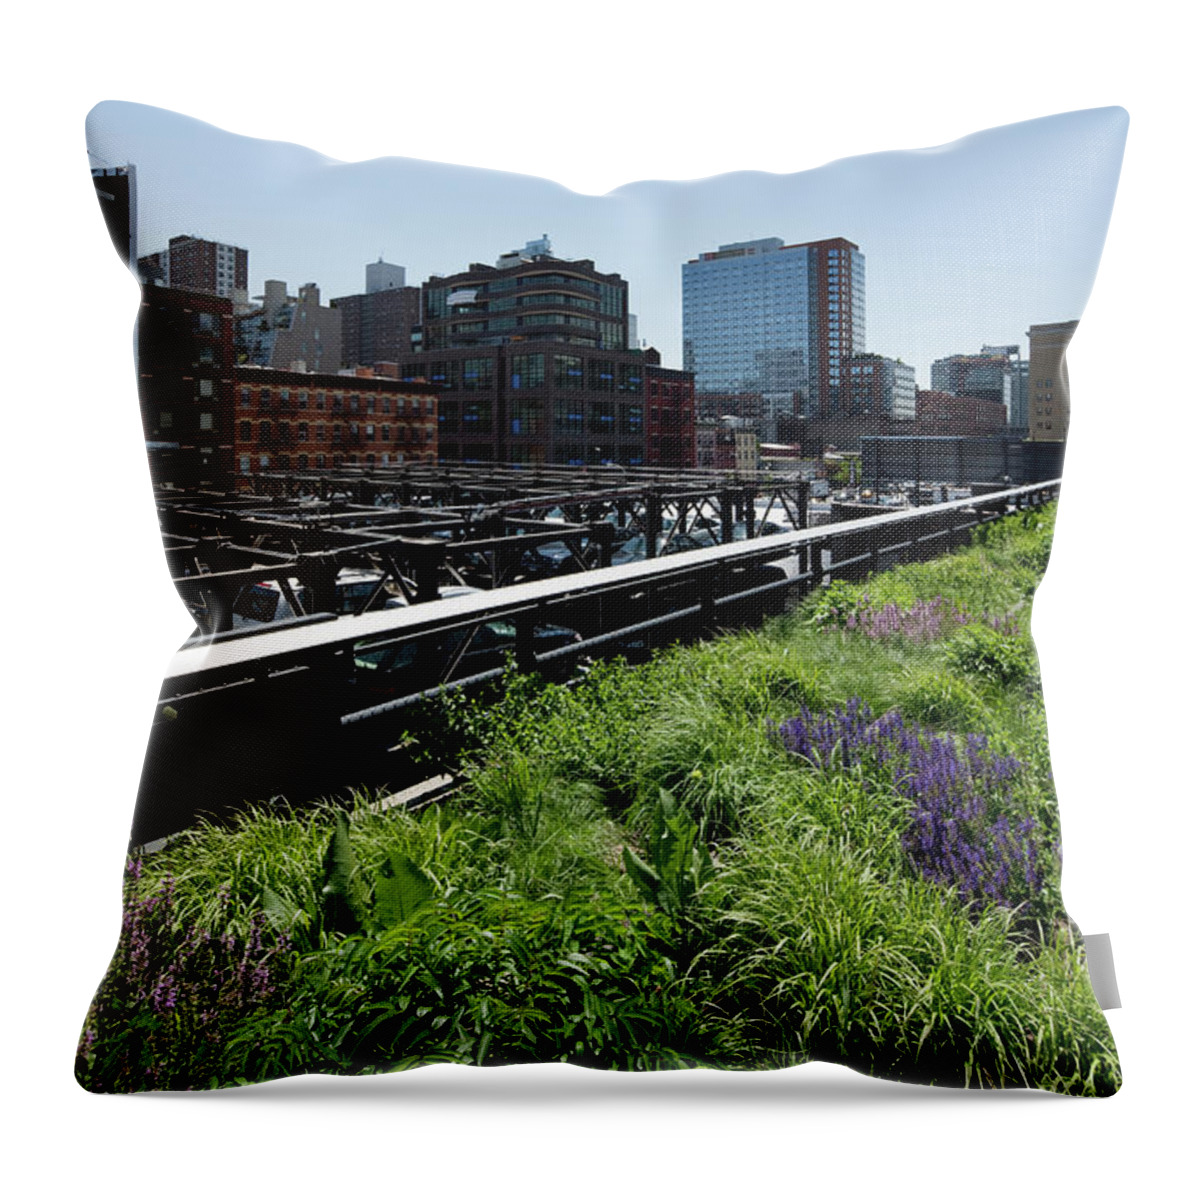 Grass Throw Pillow featuring the photograph High Line Park New York by Siegfried Layda